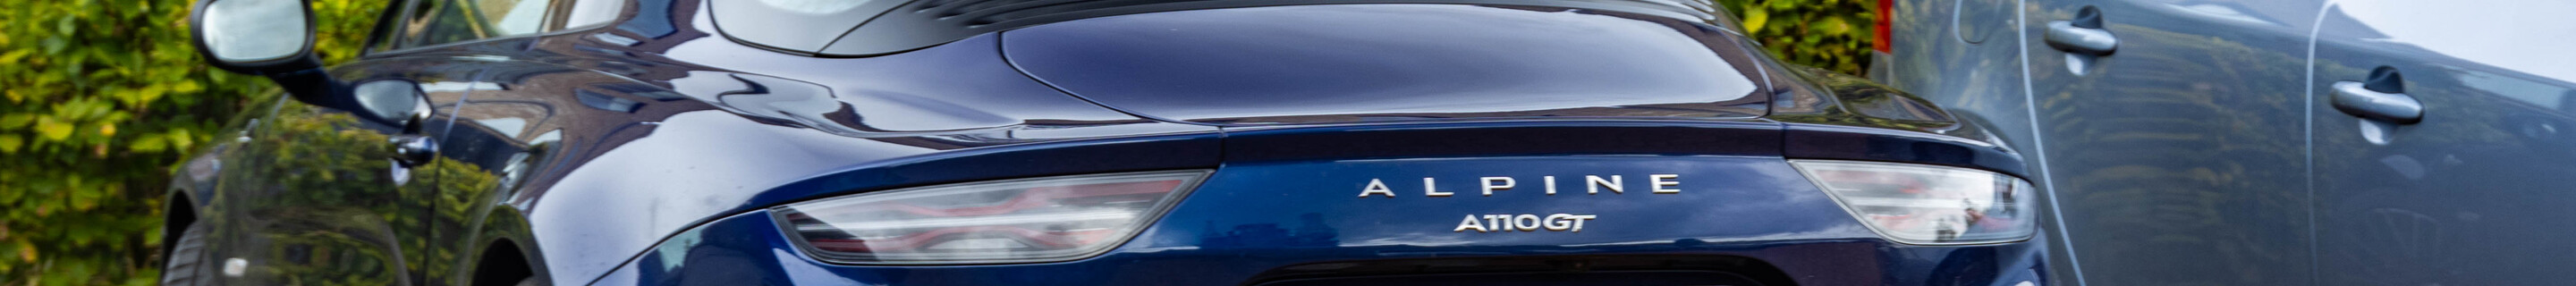 Alpine A110 GT 2022